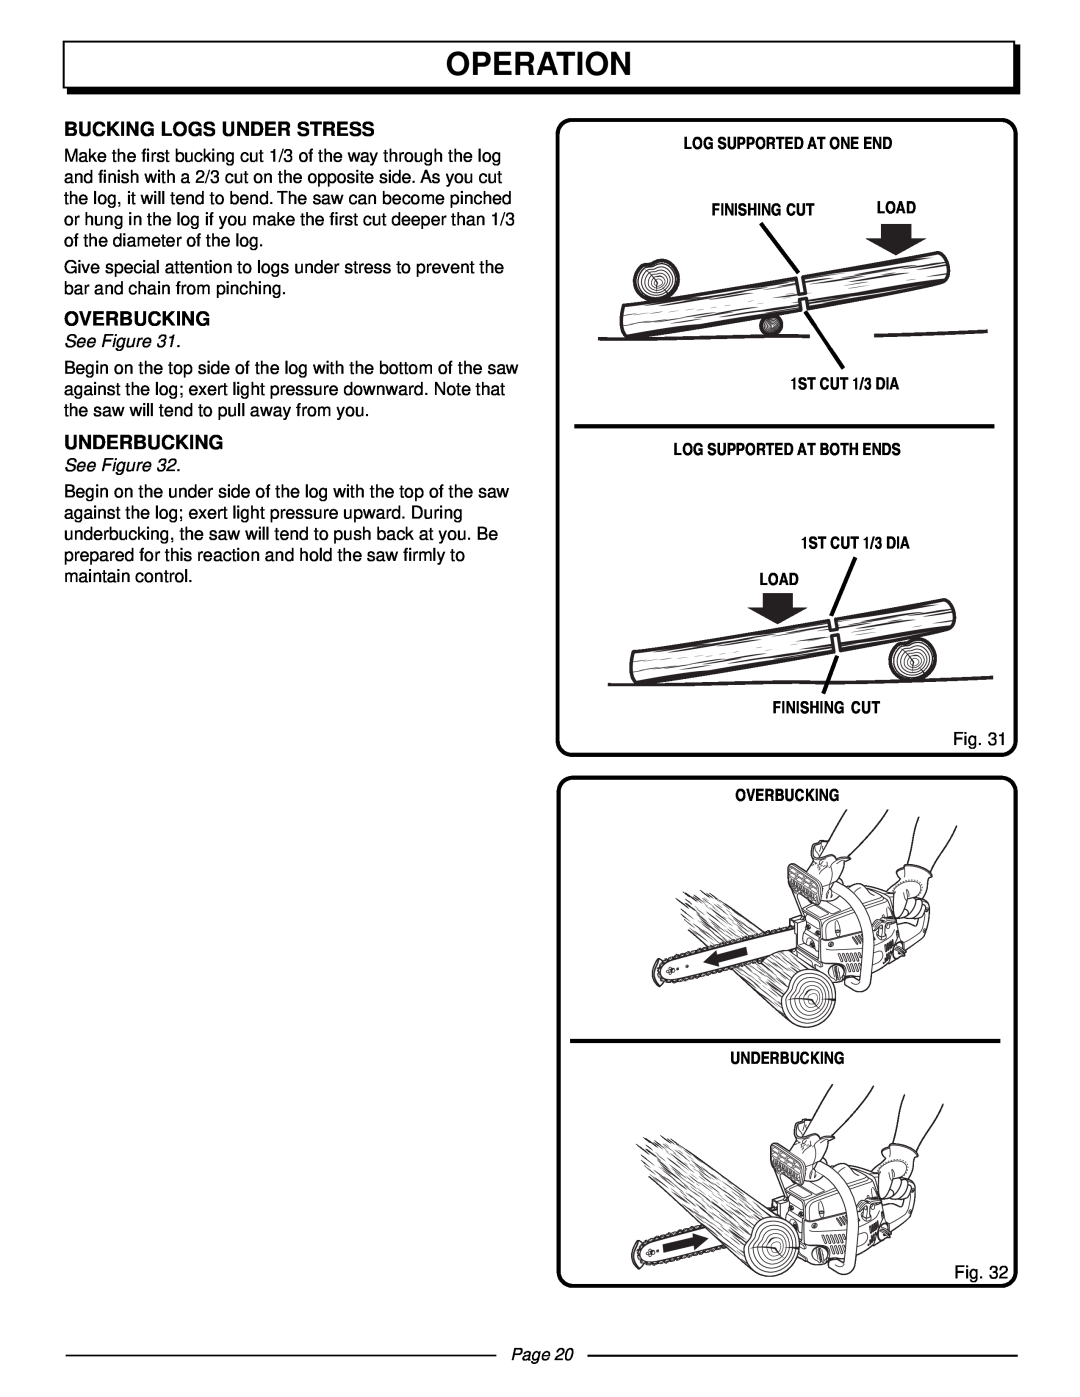 Homelite UT10510 manual Operation, Bucking Logs Under Stress, Overbucking, Underbucking, See Figure, Page 